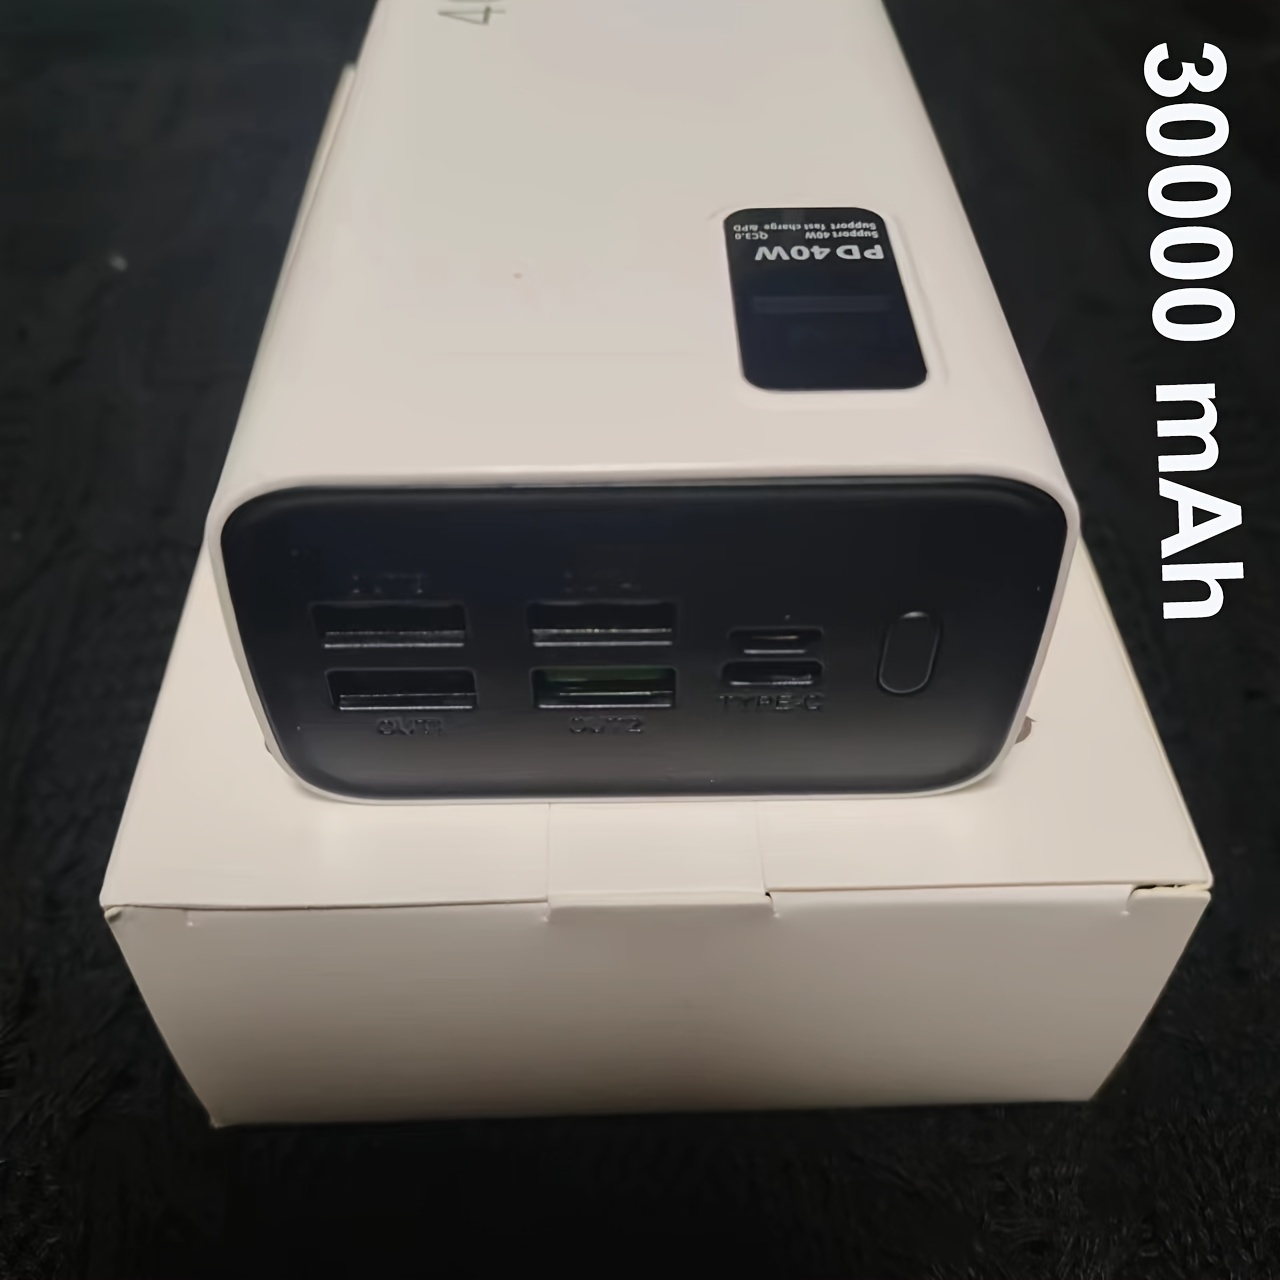 30000mAh Power Bank USB C 30000 mah Powerbank Fast Charge For Xiaomi Mi  iPhone